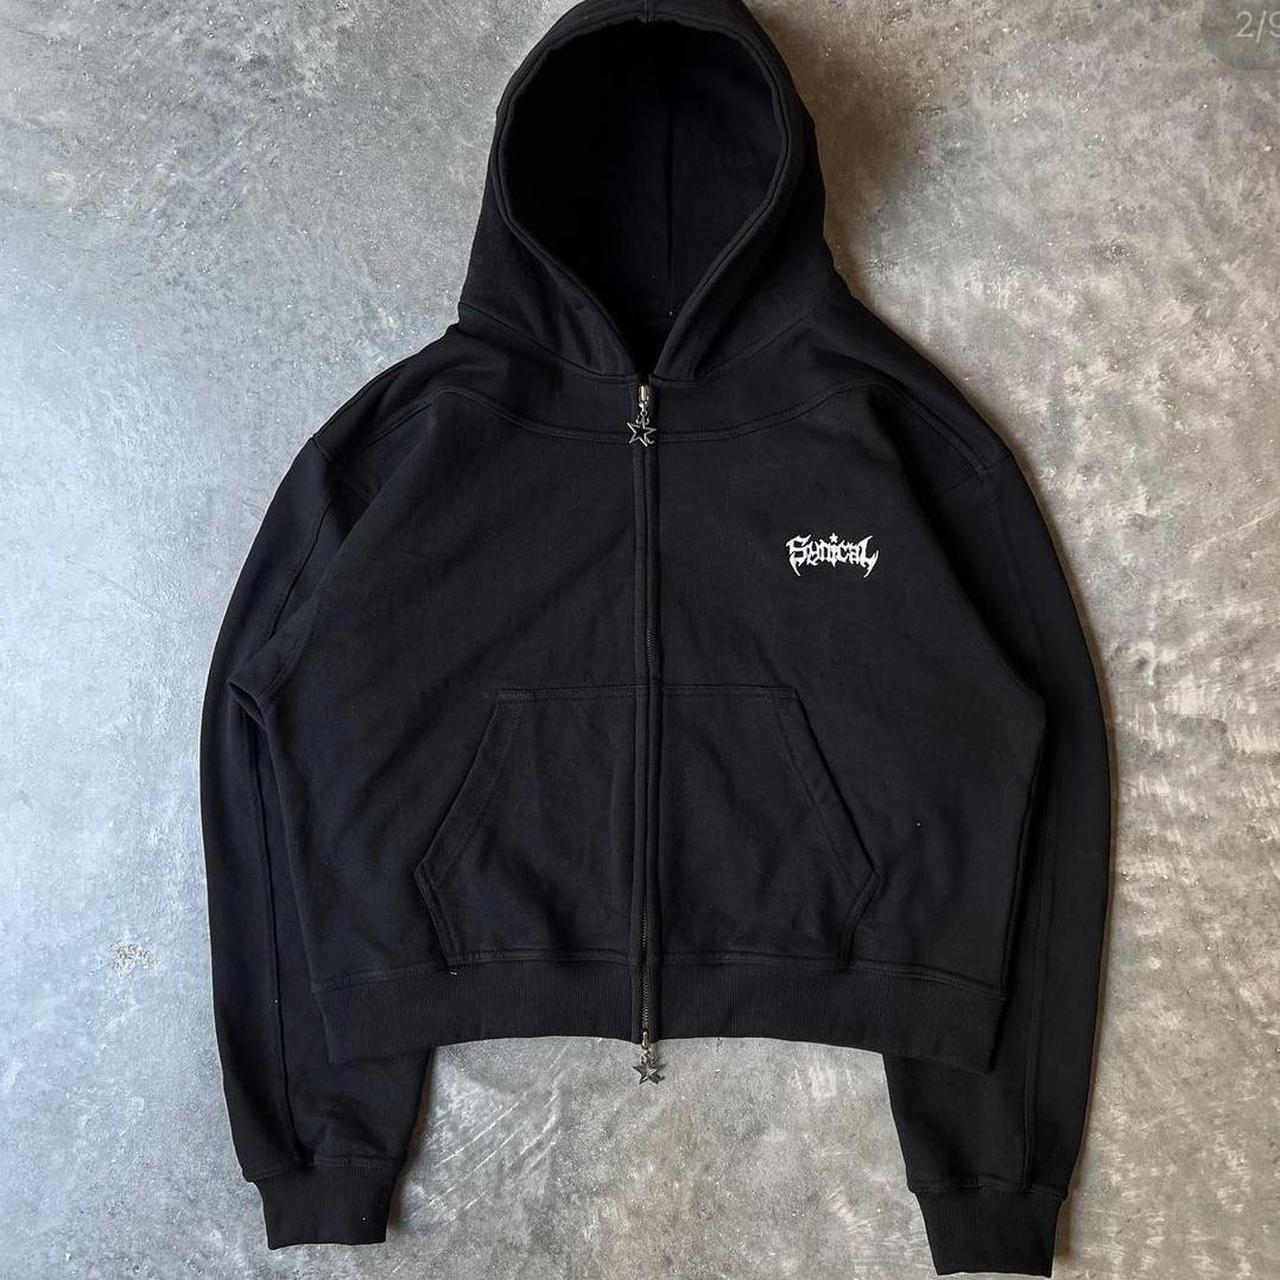 Synical global zip up hoodie brand new haven’t worn... - Depop